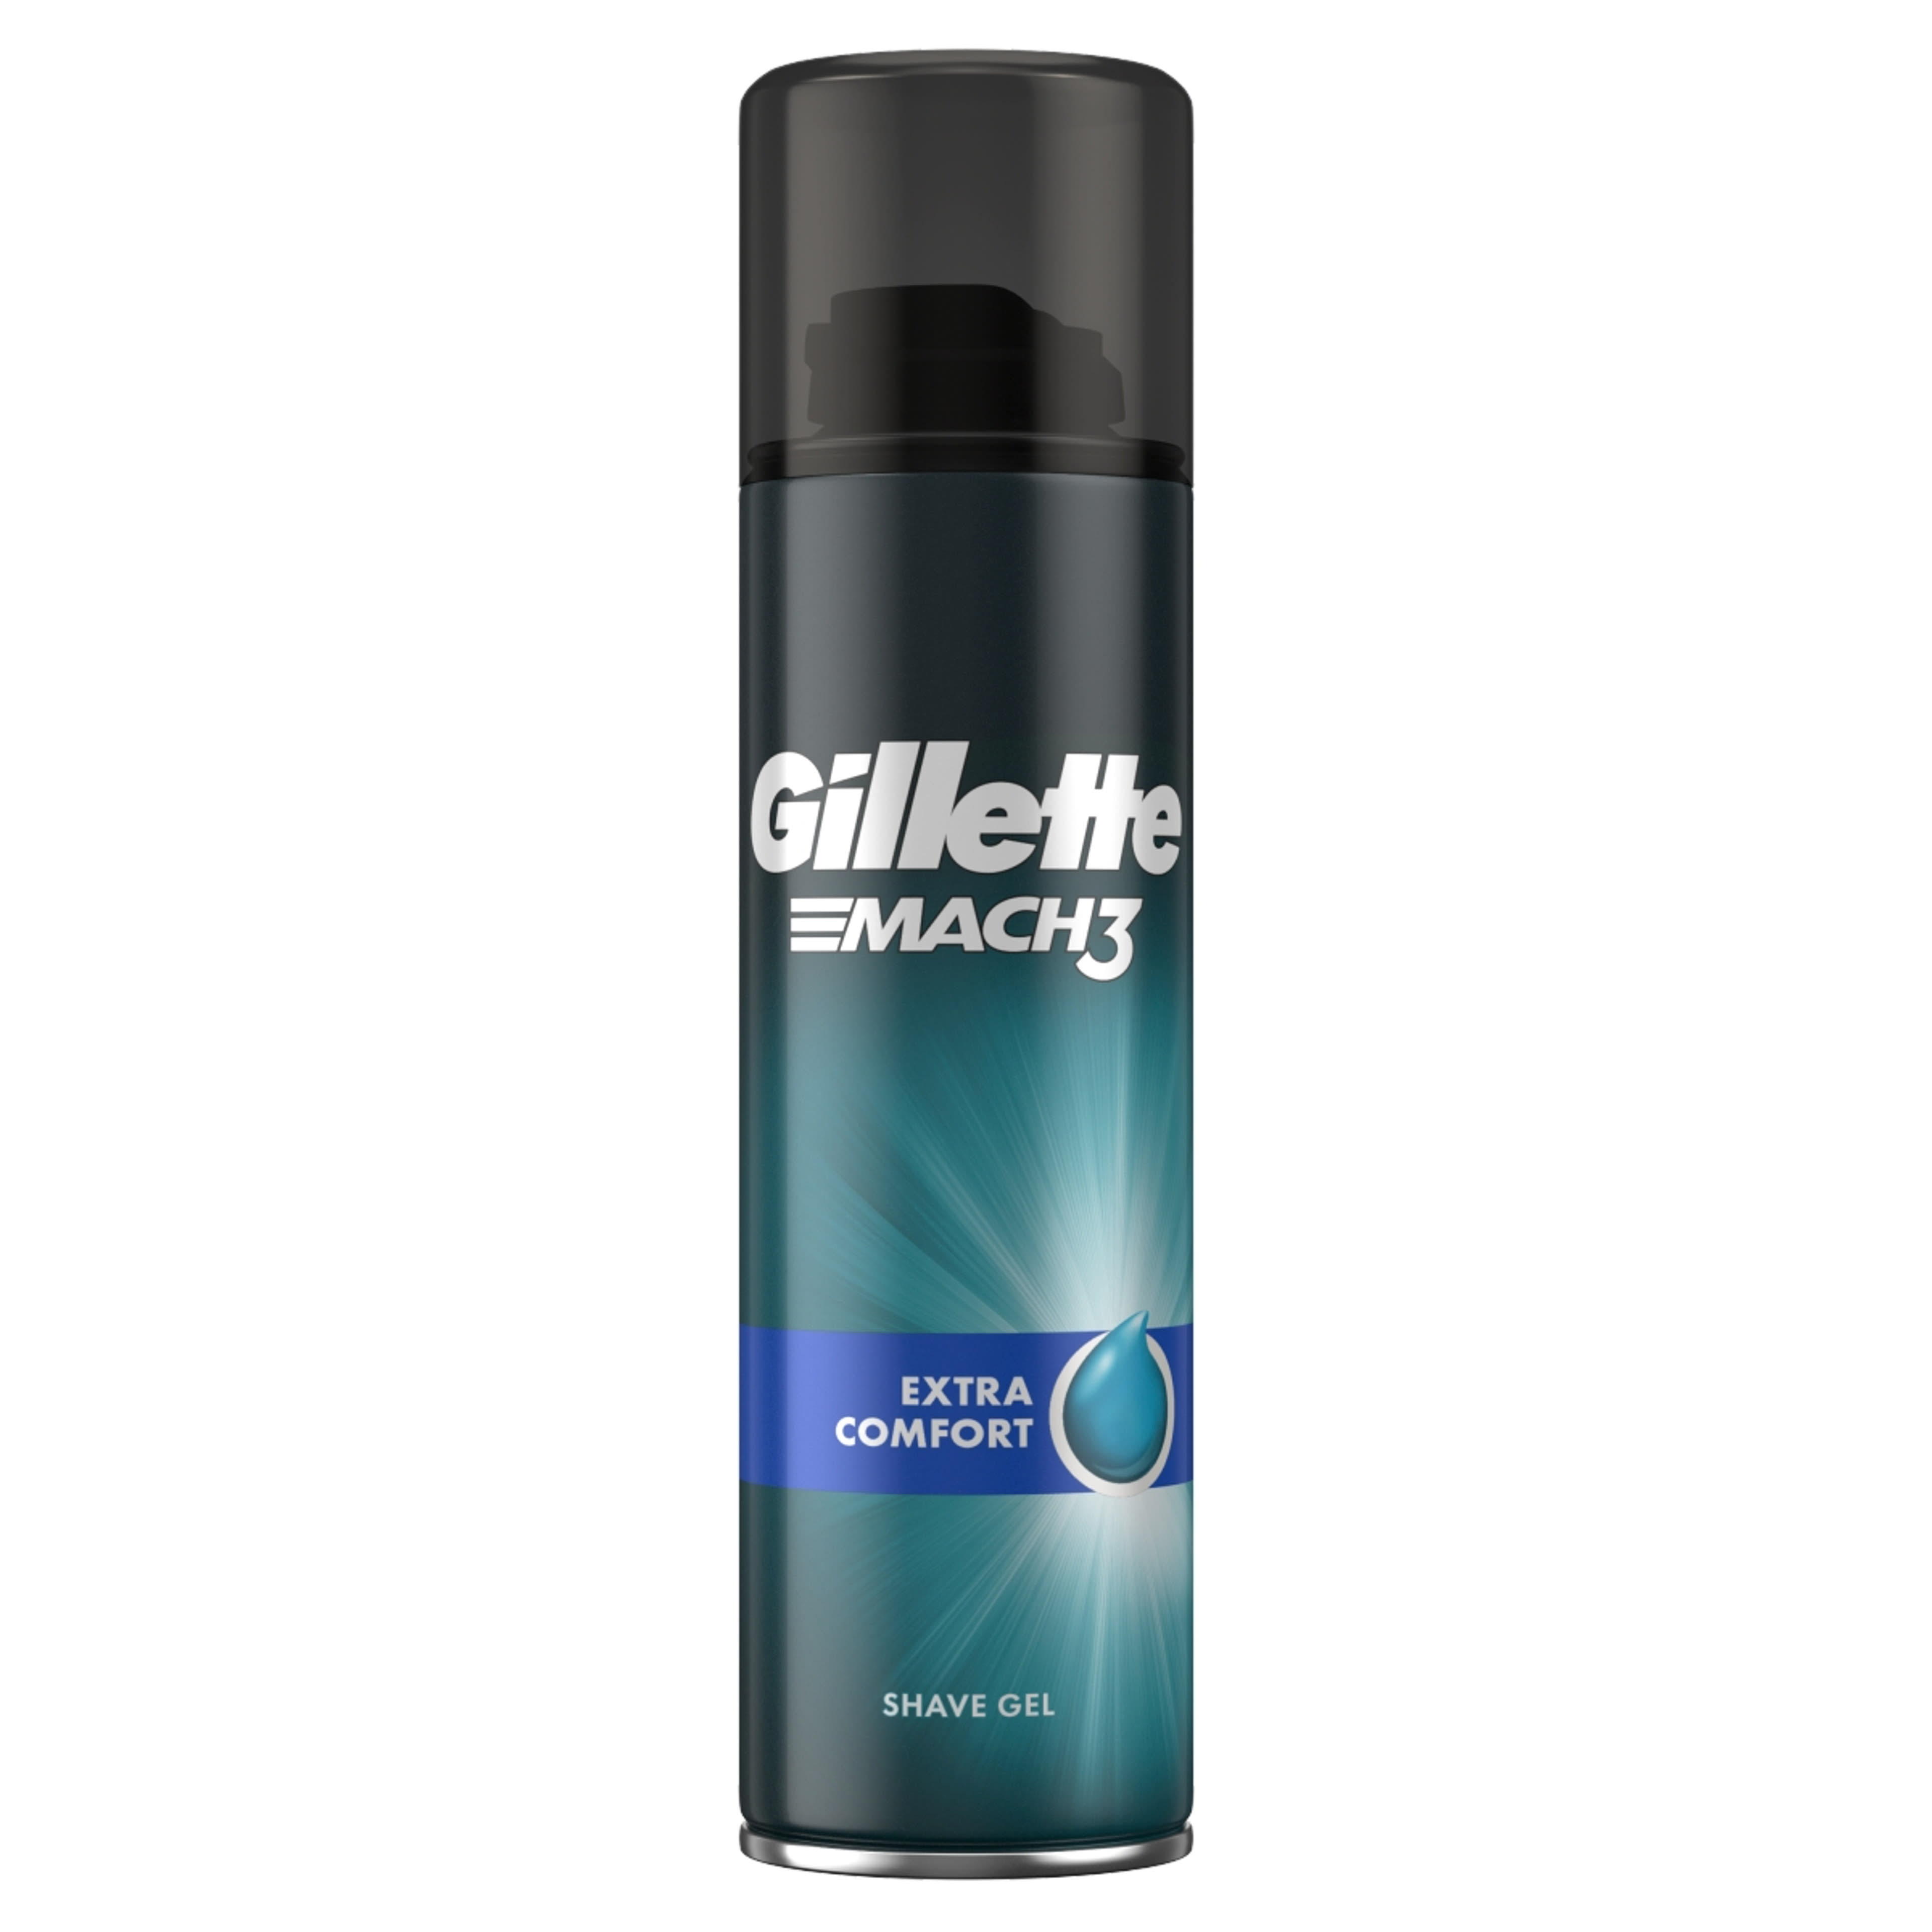 Gillette Mach3 bornyugtató borotvazselé - 200 ml-1